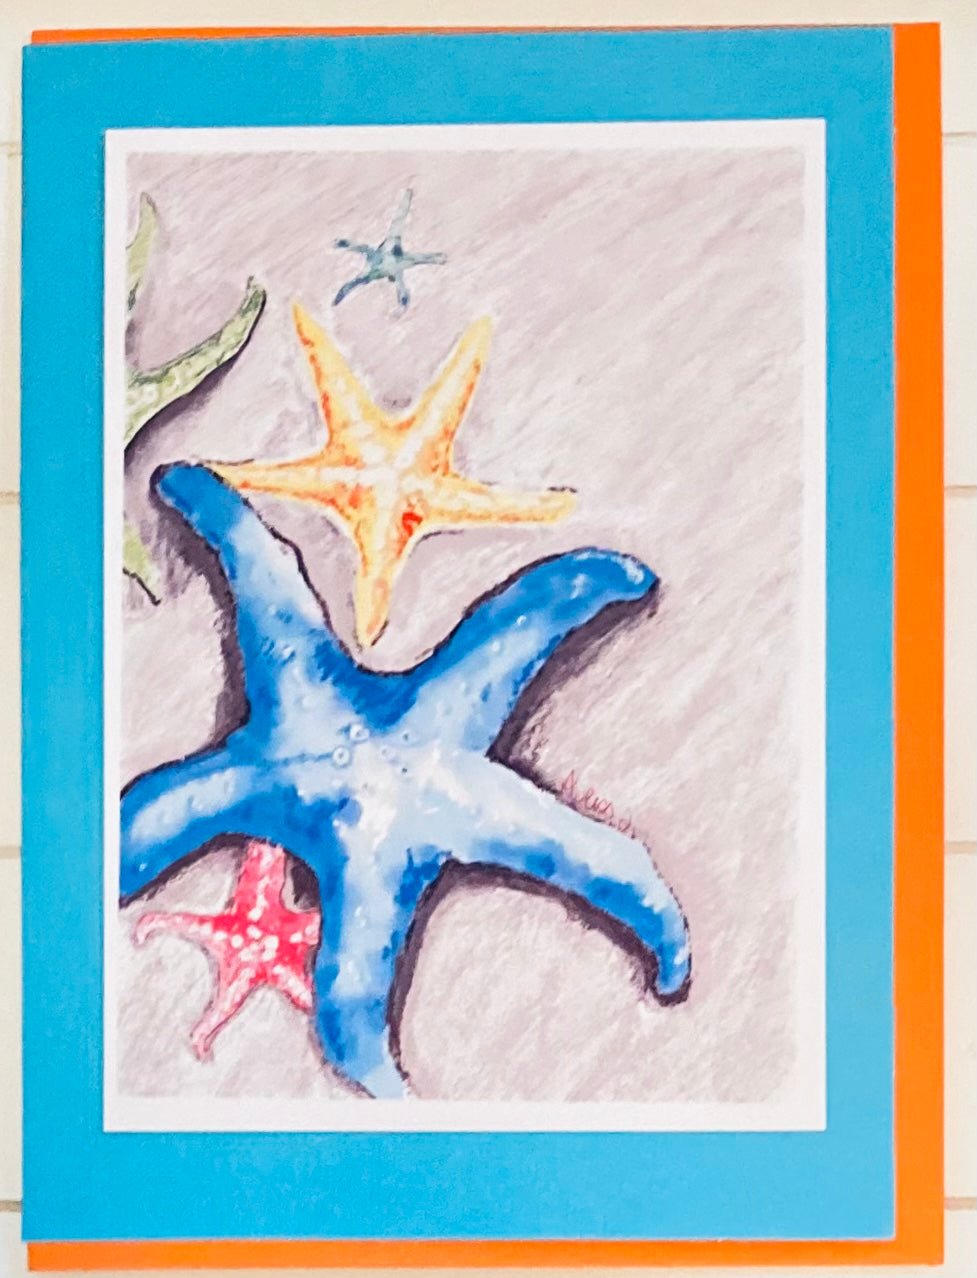 Starfish Greeting card - Blue Cava